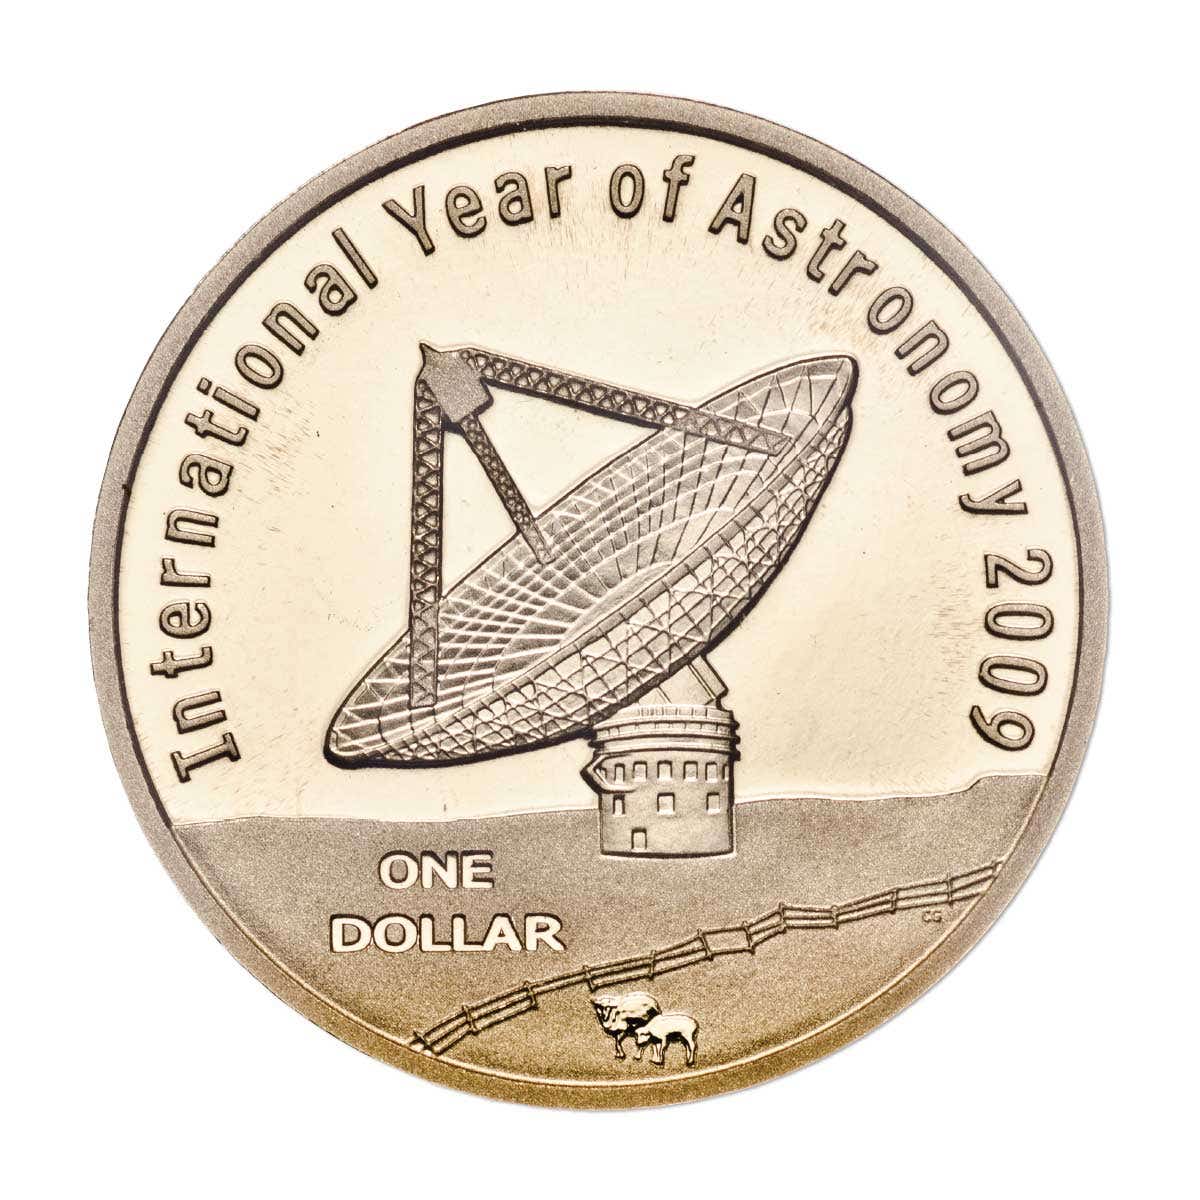 Australia International Year of Astronomy 2009 6-Coin Proof Set